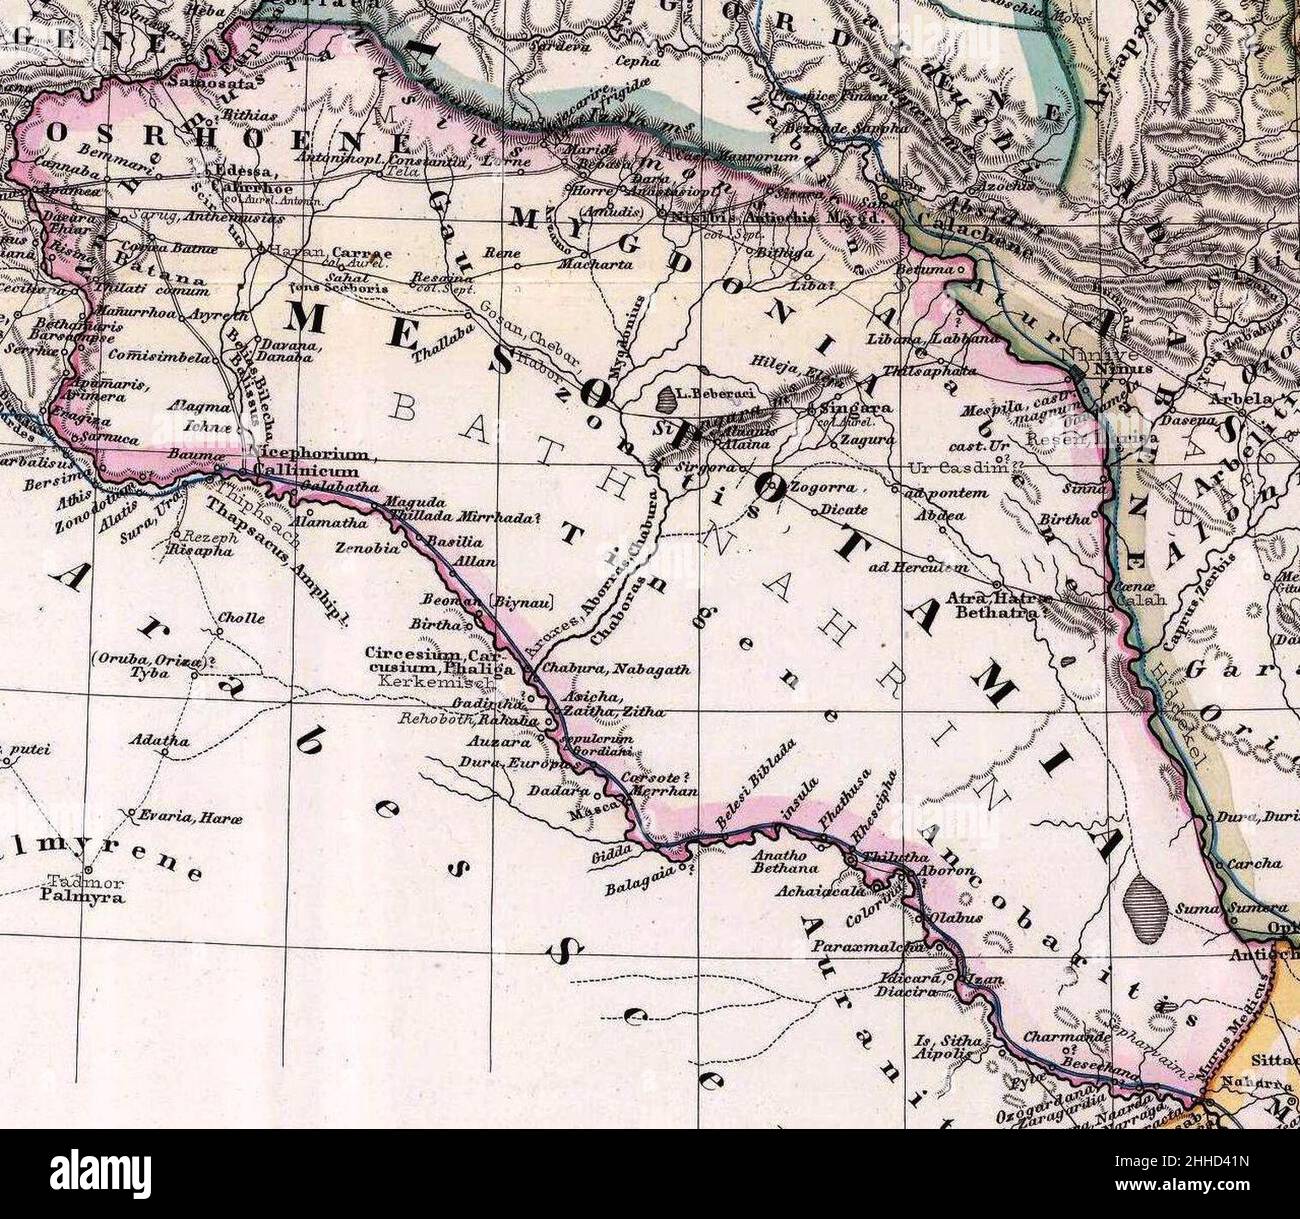 Spruner von Merz, Karl; Menke, TH 1865 Albanie, Iberia,Colchis, Arménie, Mésopotamie, Babylonia, Assyrie (J). Banque D'Images